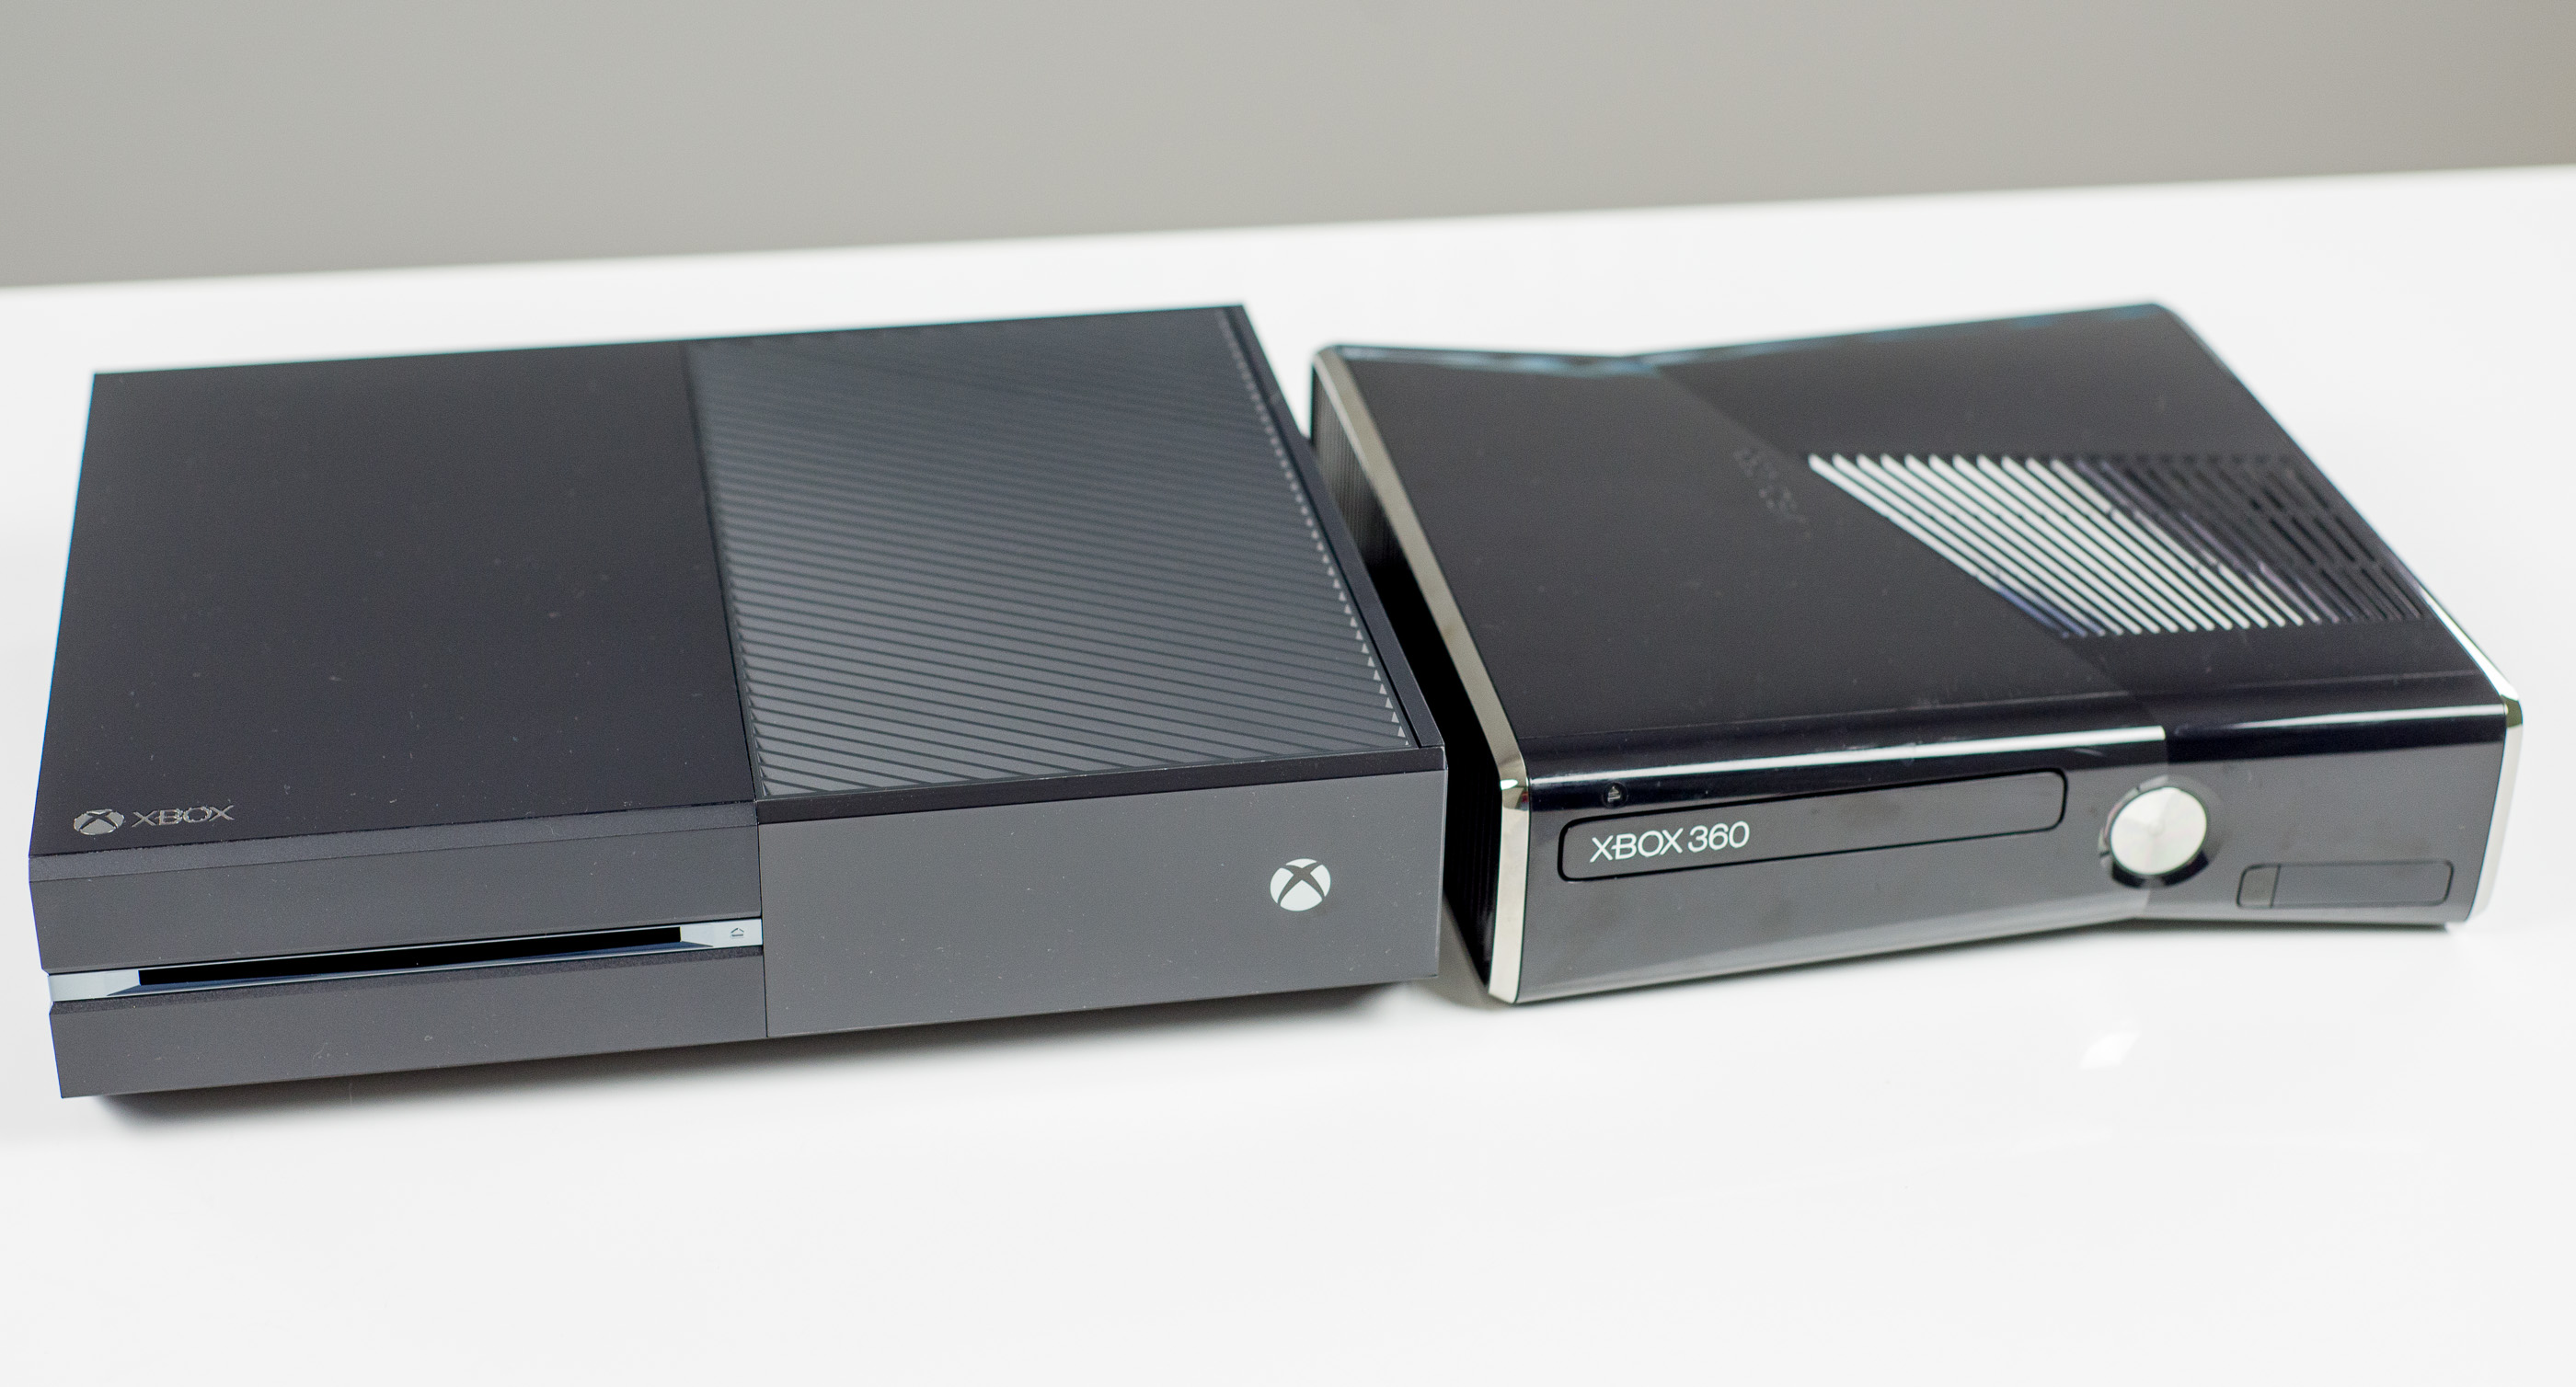 Mens logboek Betekenis The Xbox One - Mini Review & Comparison to Xbox 360/PS4